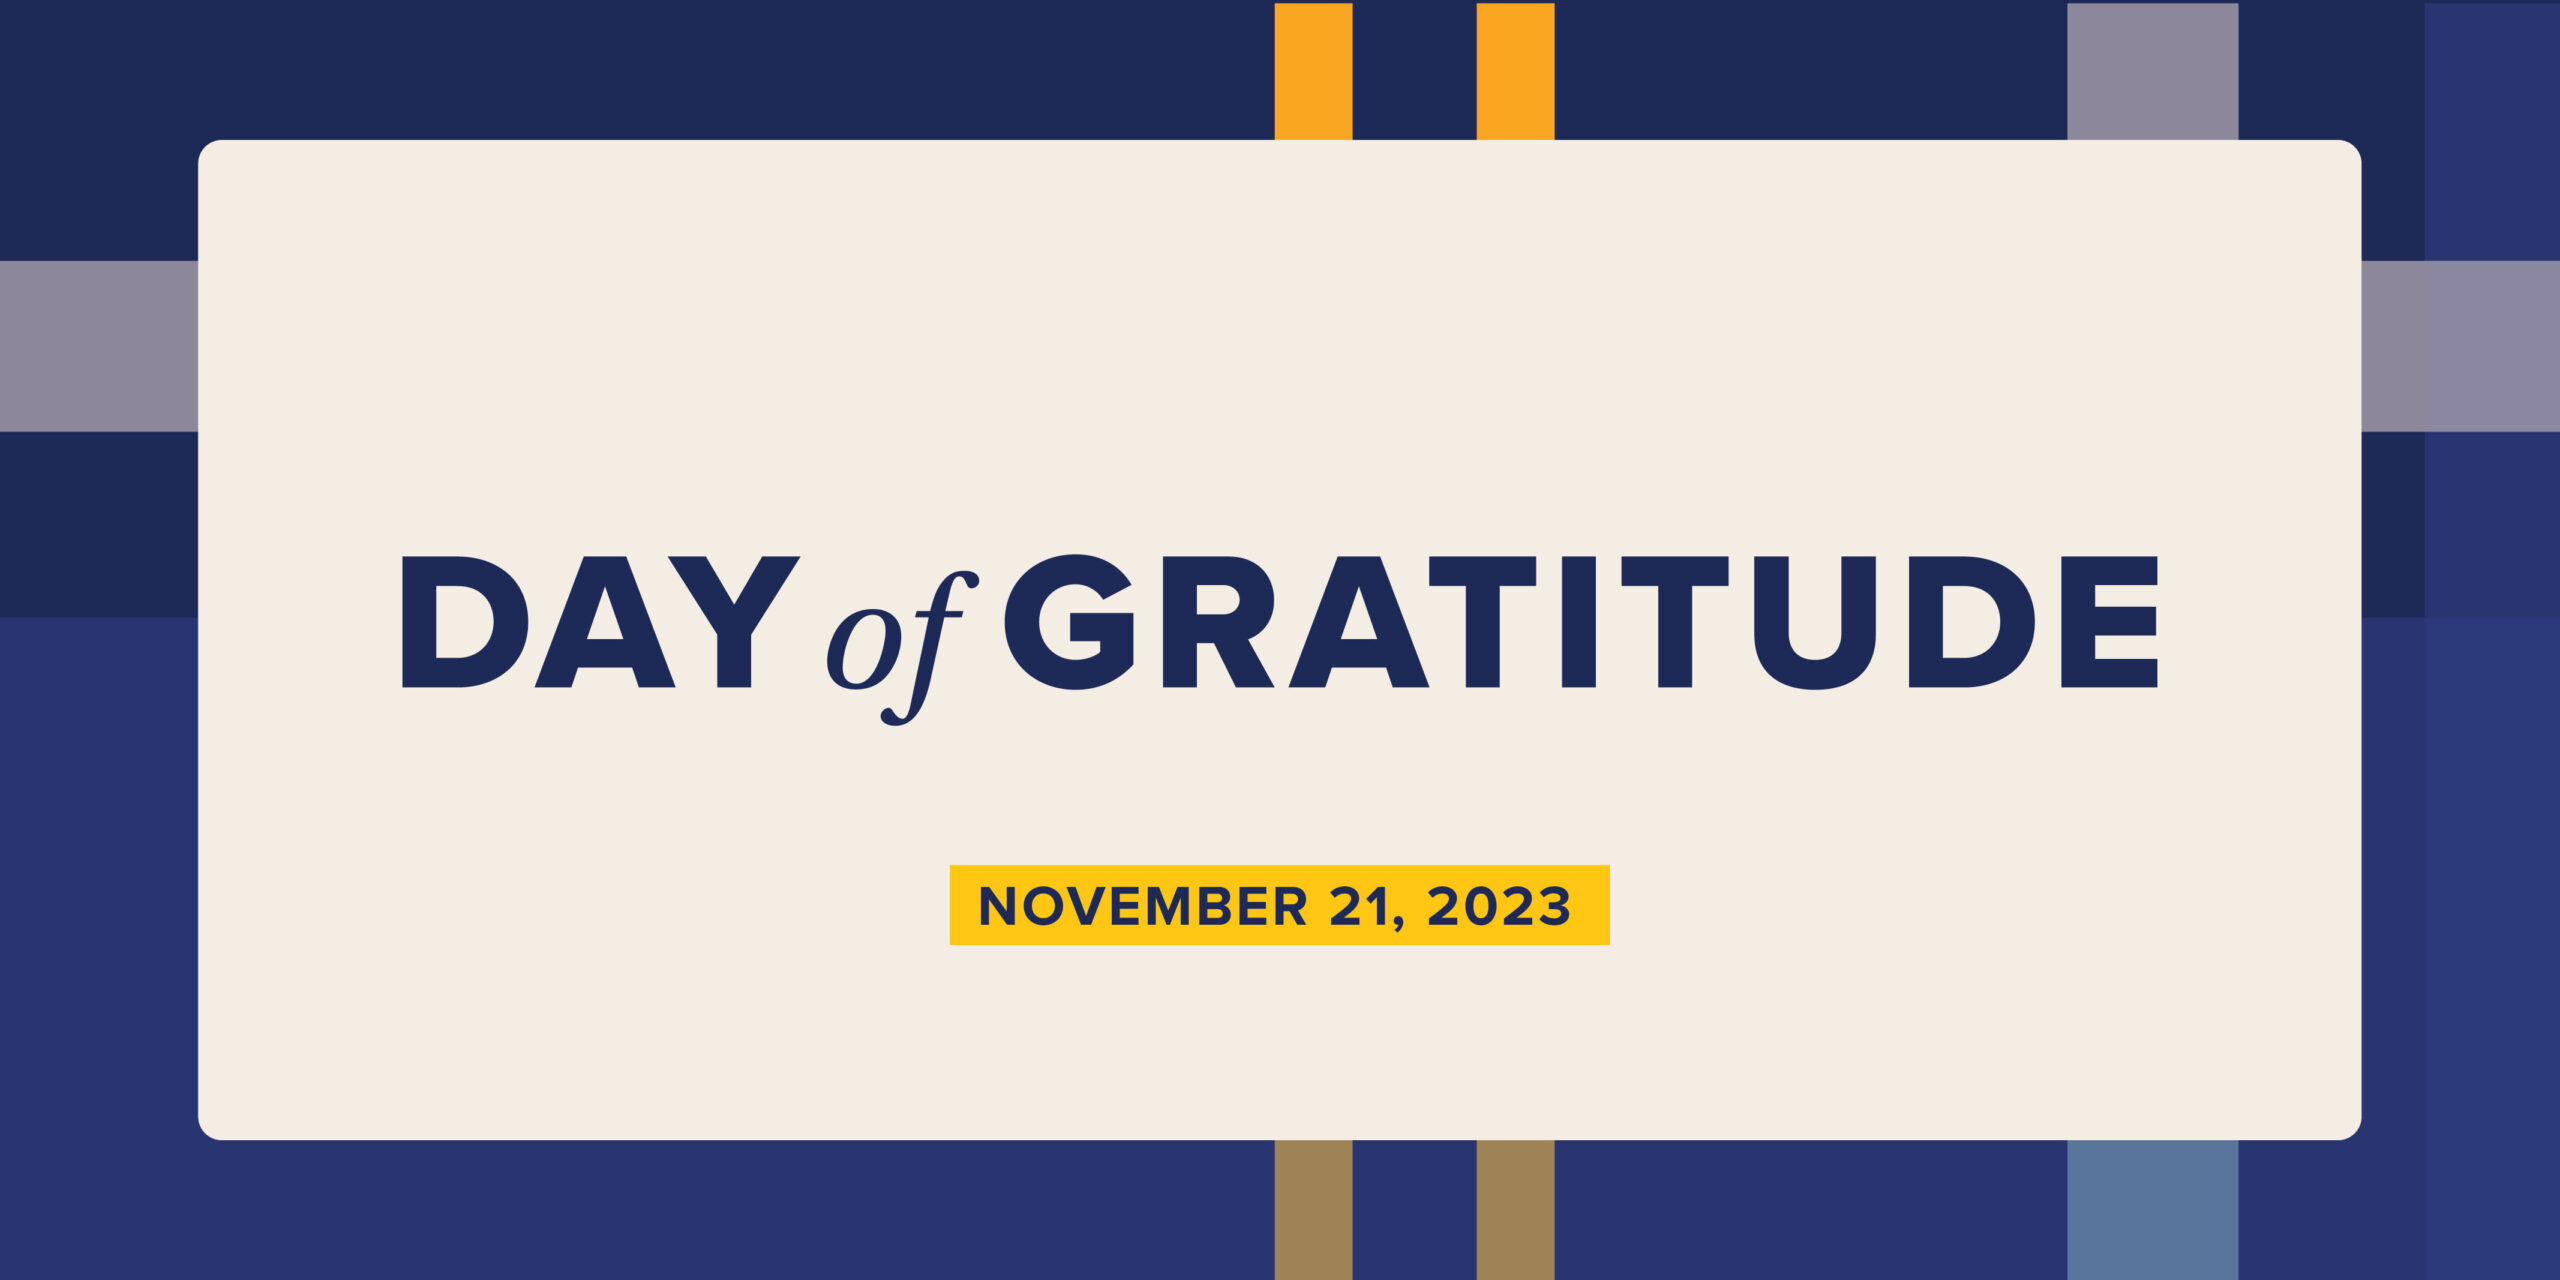 Day of Gratitude, November 21, 2023 graphics